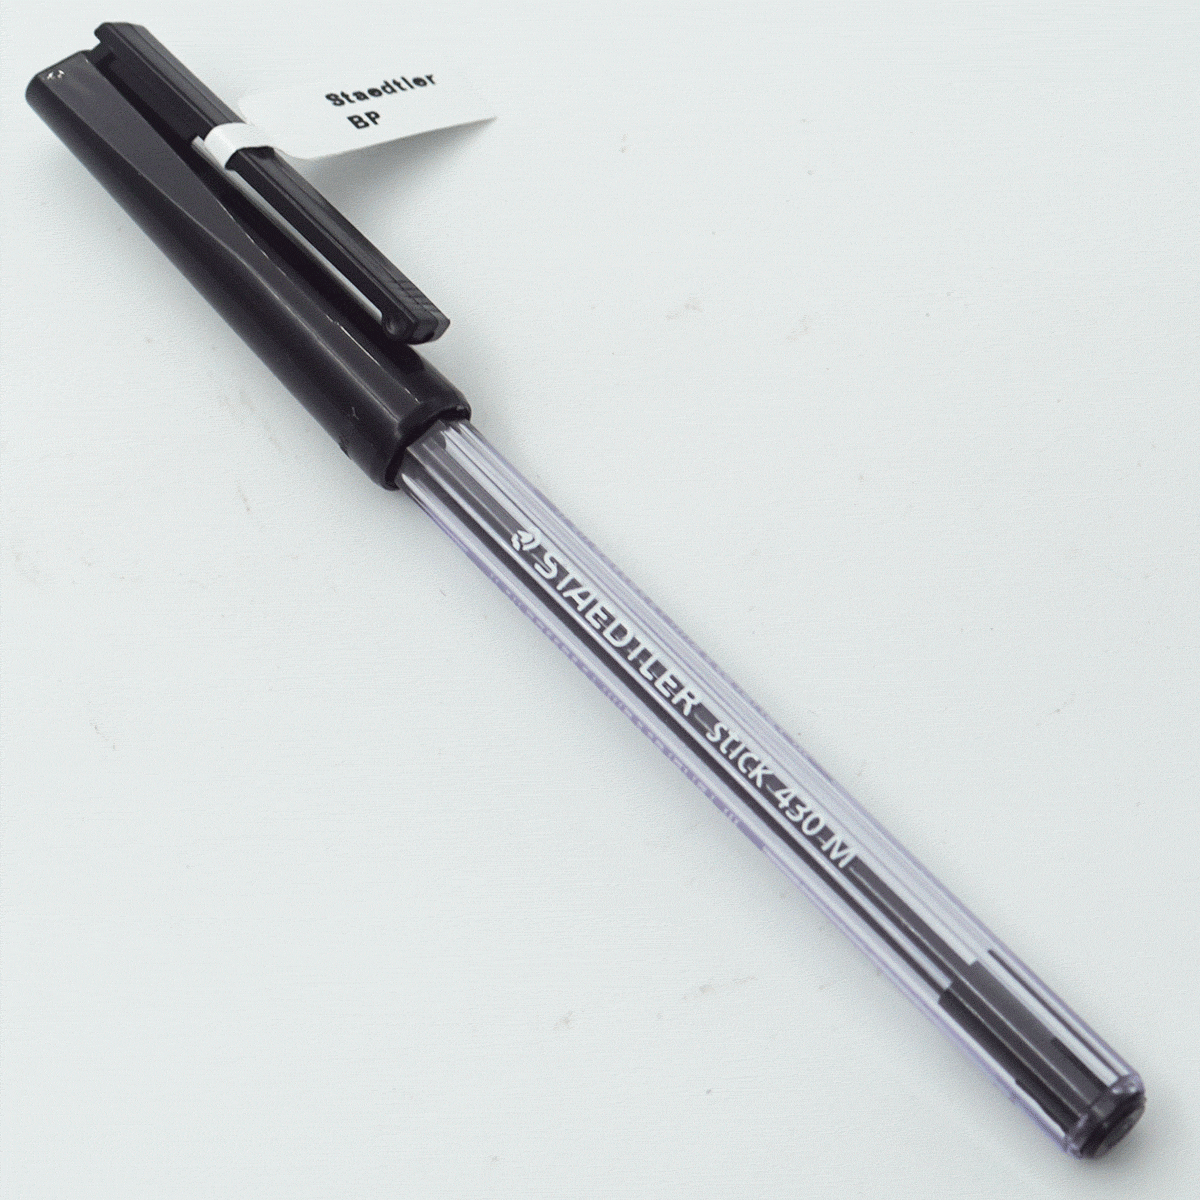 Staedtler 430 M-9 Transparent Body With Black Color Clip Black writing Medium Tip Cap Type Ball Pen SKU 24396